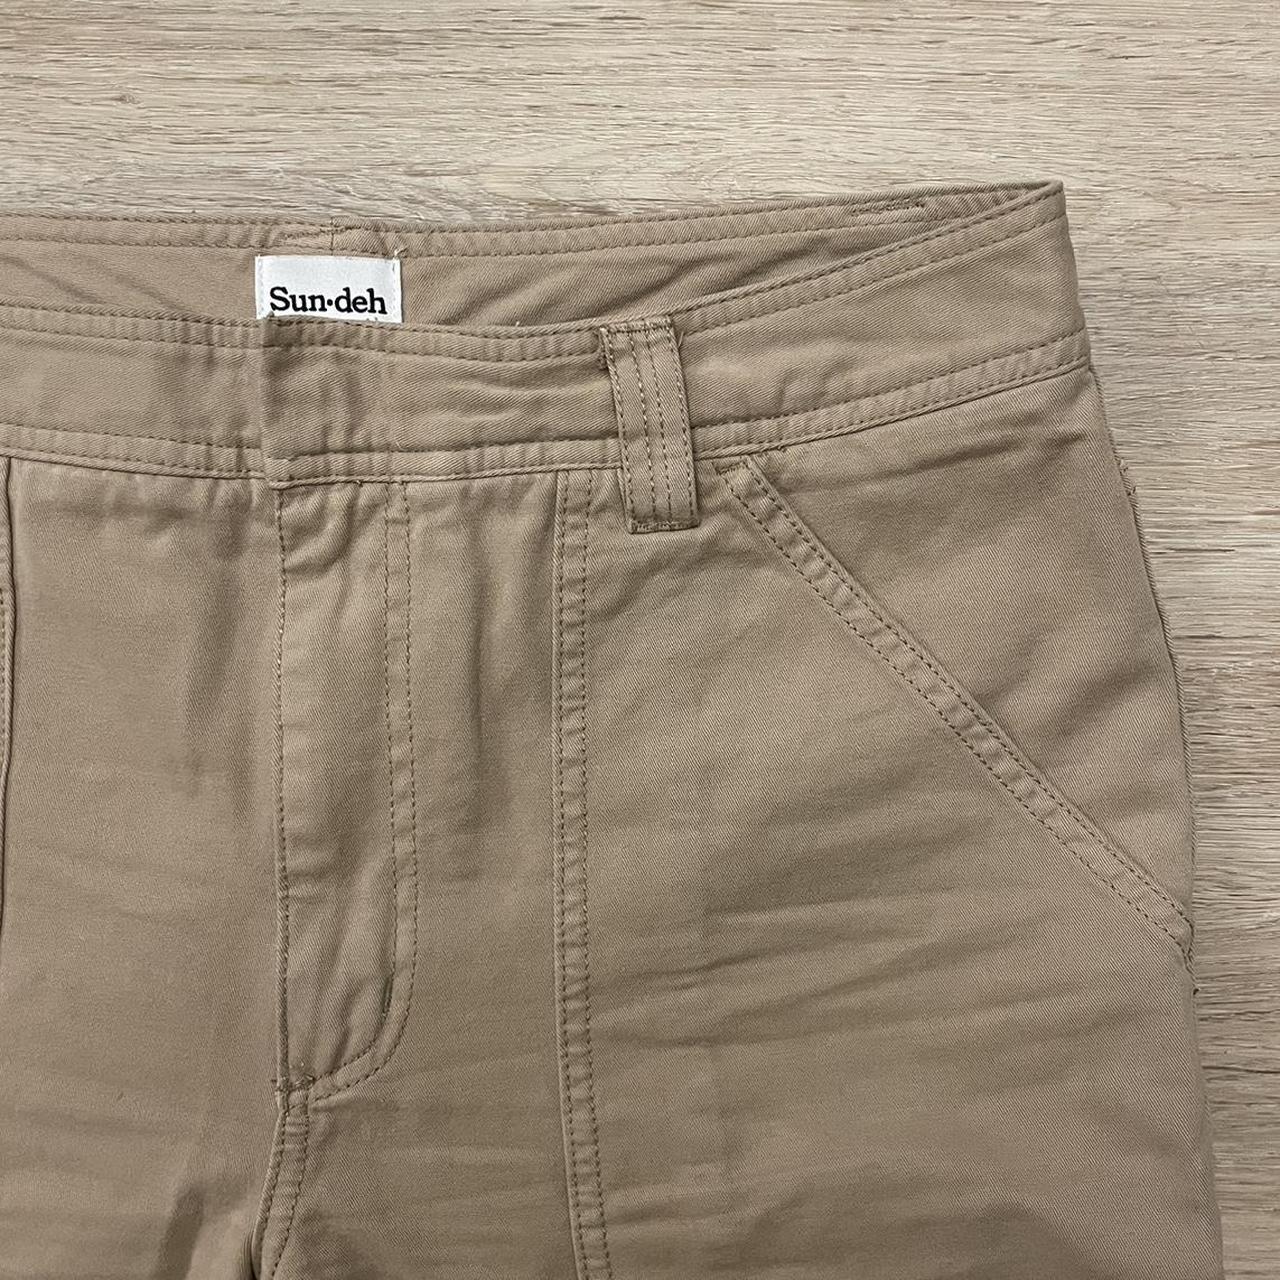 Aritzia Sun-deh Cargo Pants Size 10, fits true to... - Depop